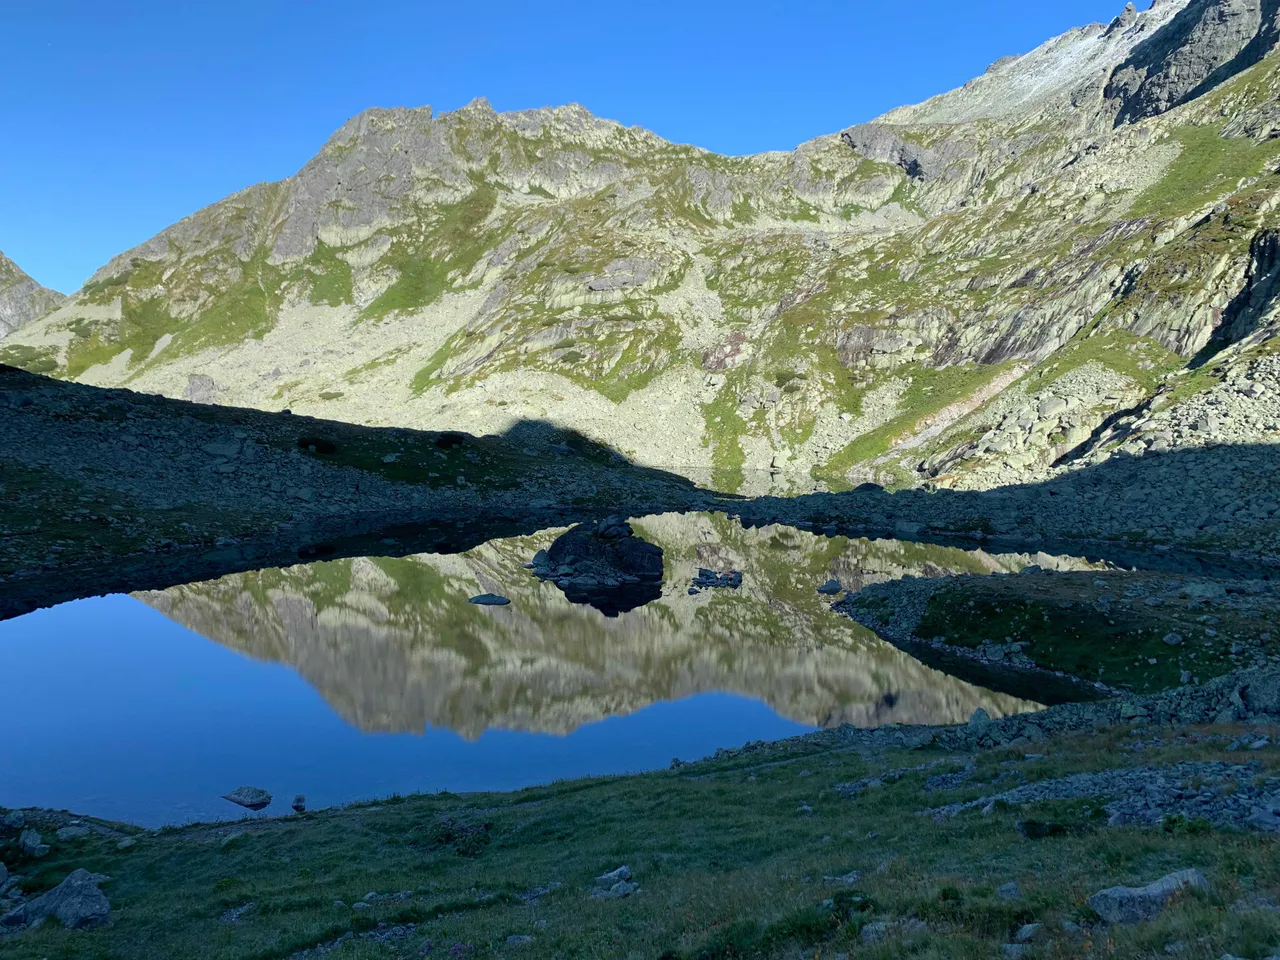 Žabie pleso ("frog's lake") in High Tatras, Slovakia